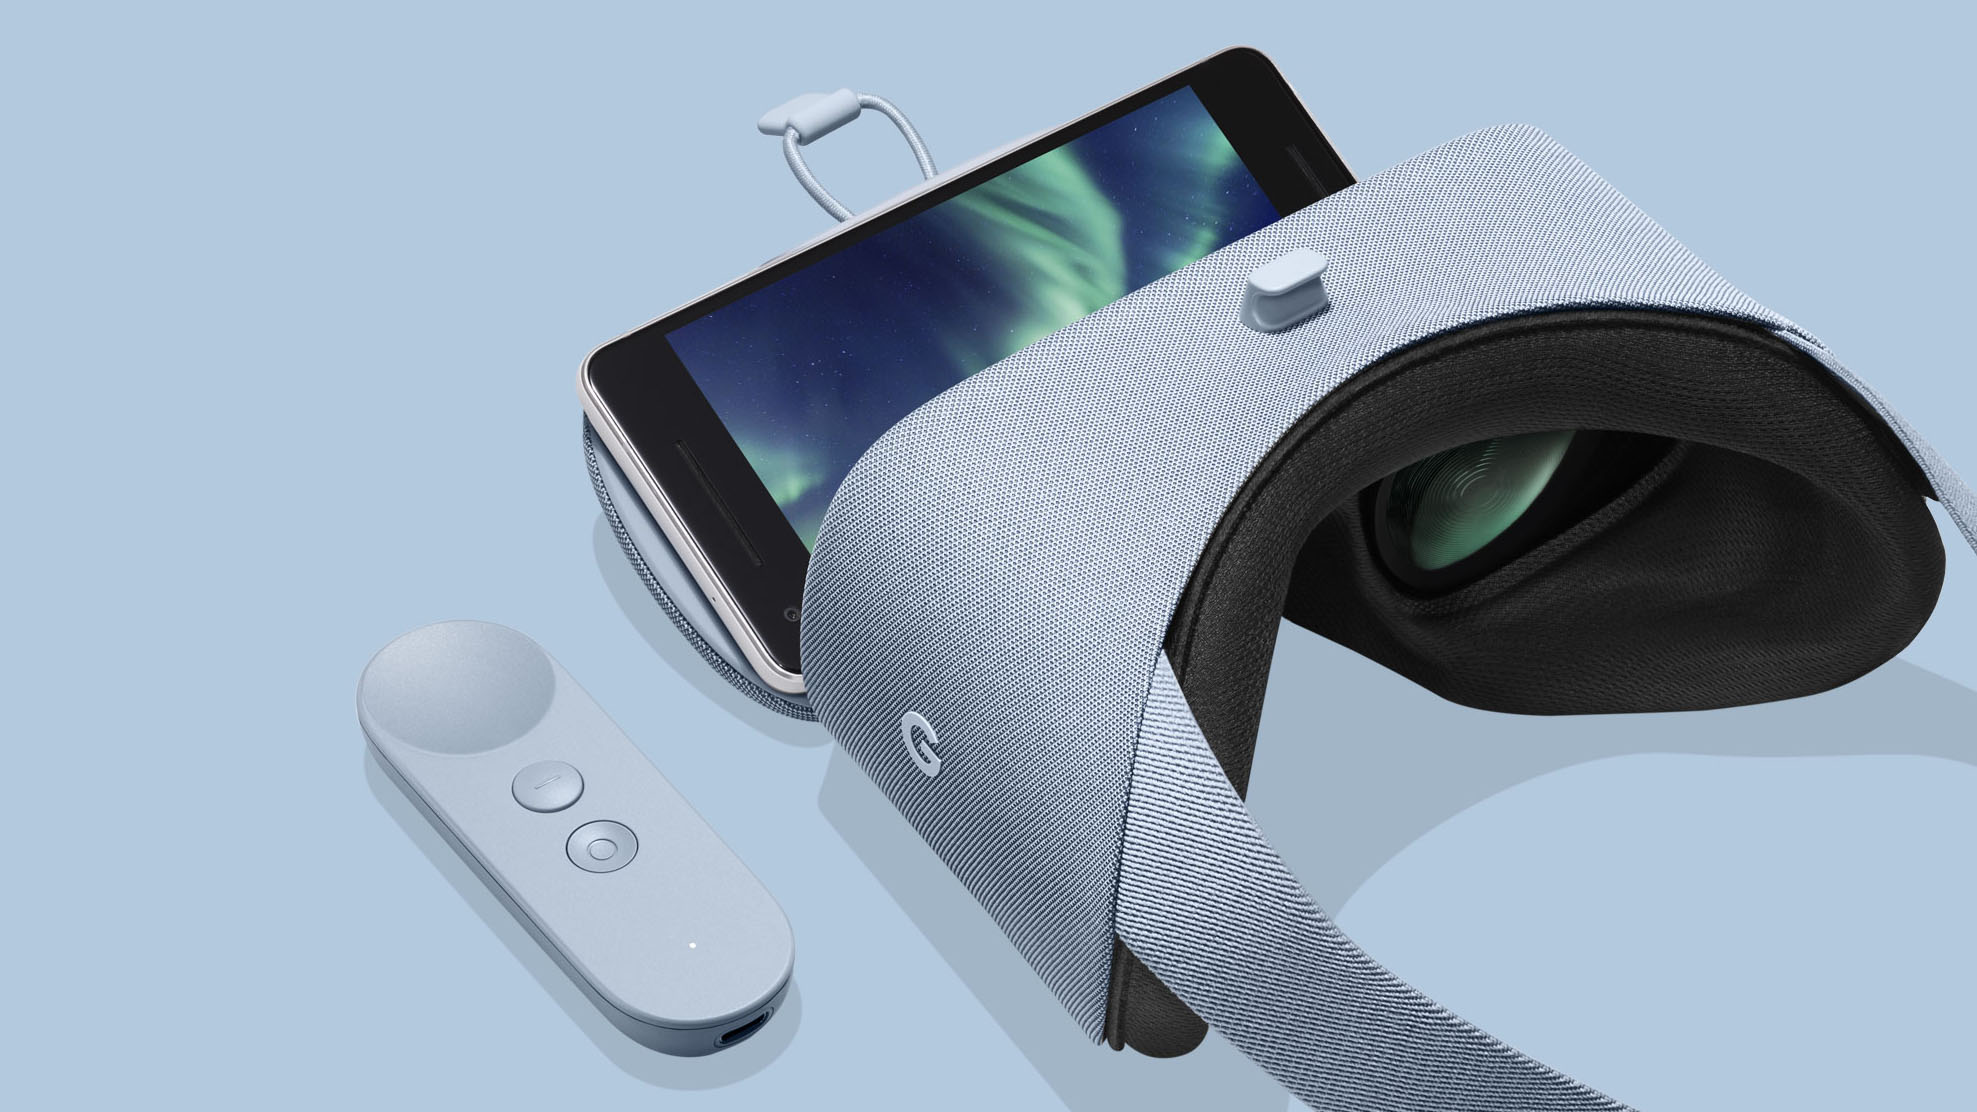 Google Daydream View VR headset